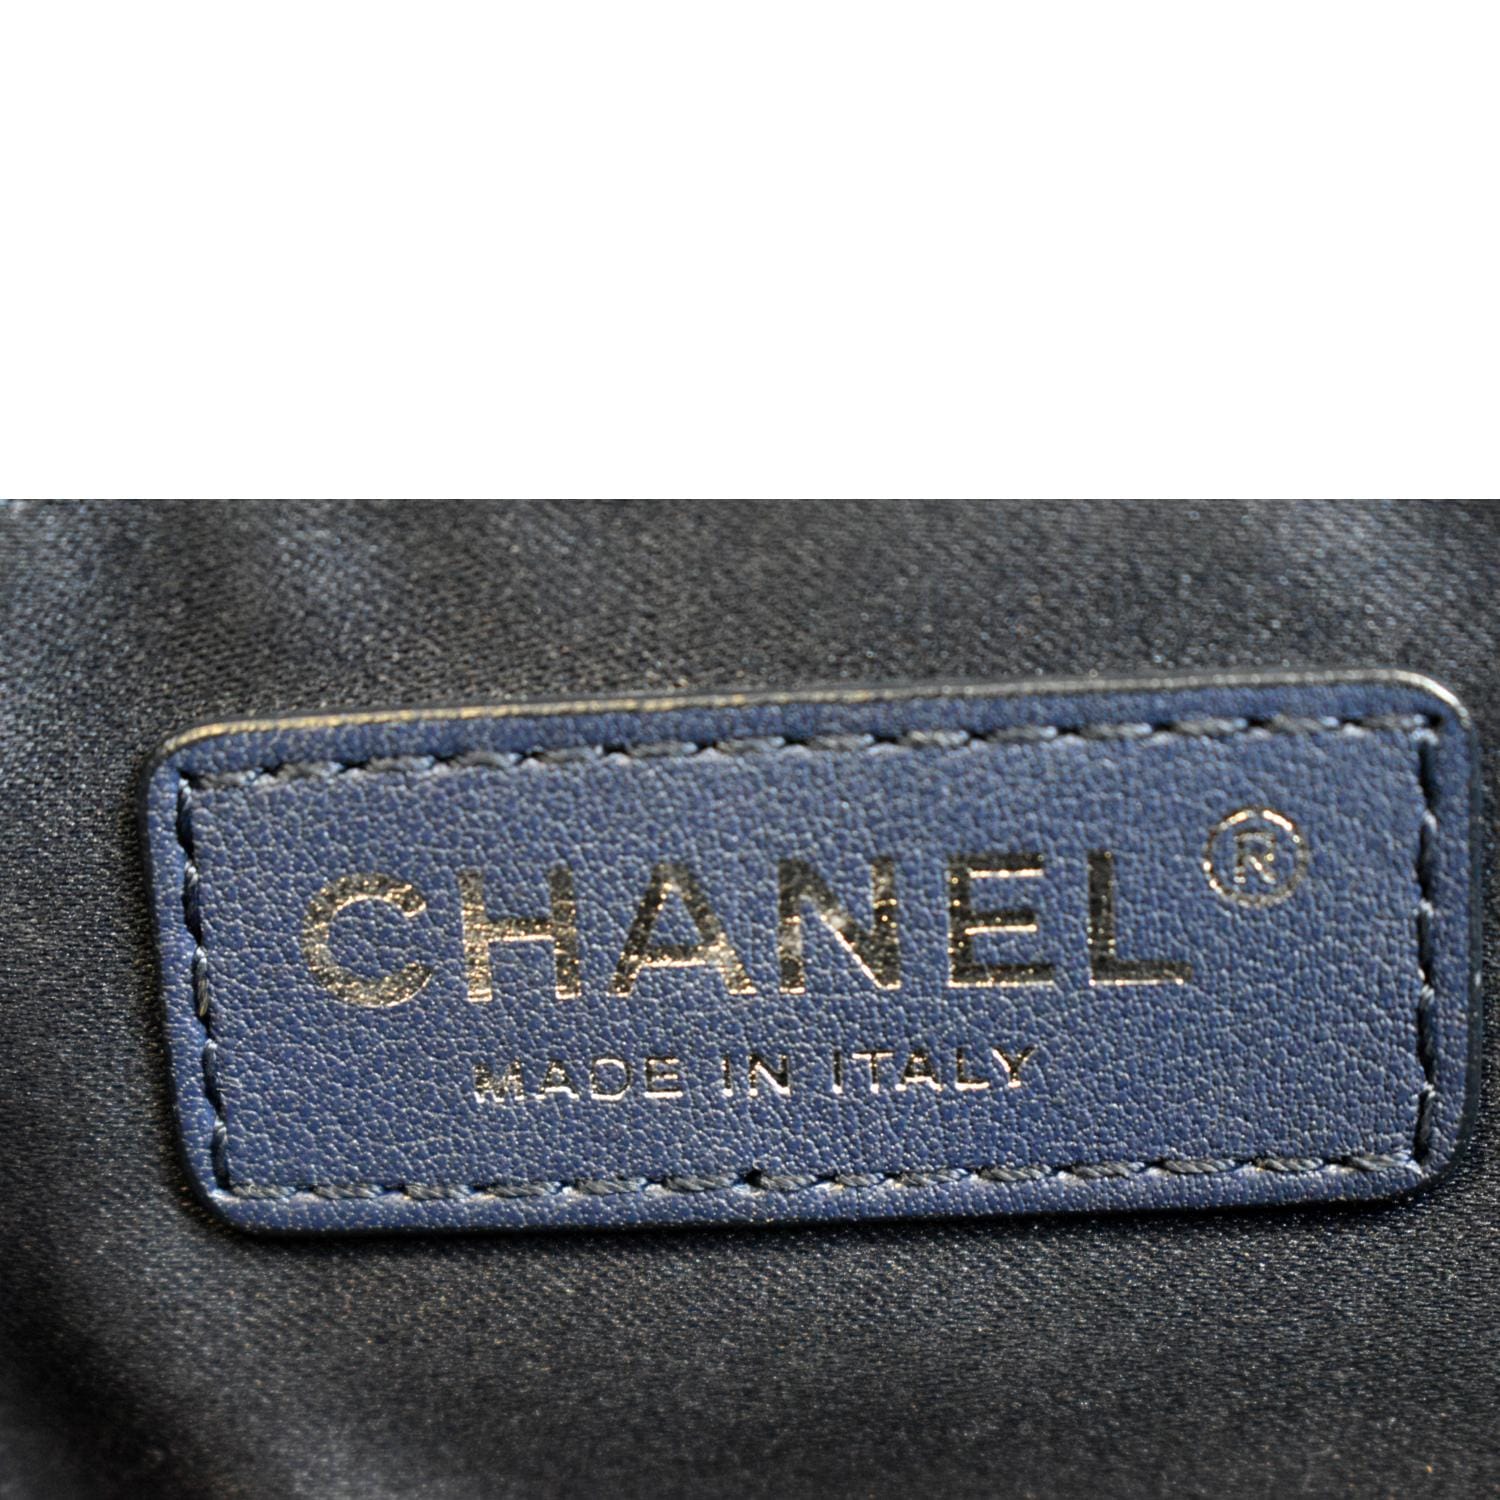 Fashion « Chanel-Vuitton », Sale n°2089, Lot n°296